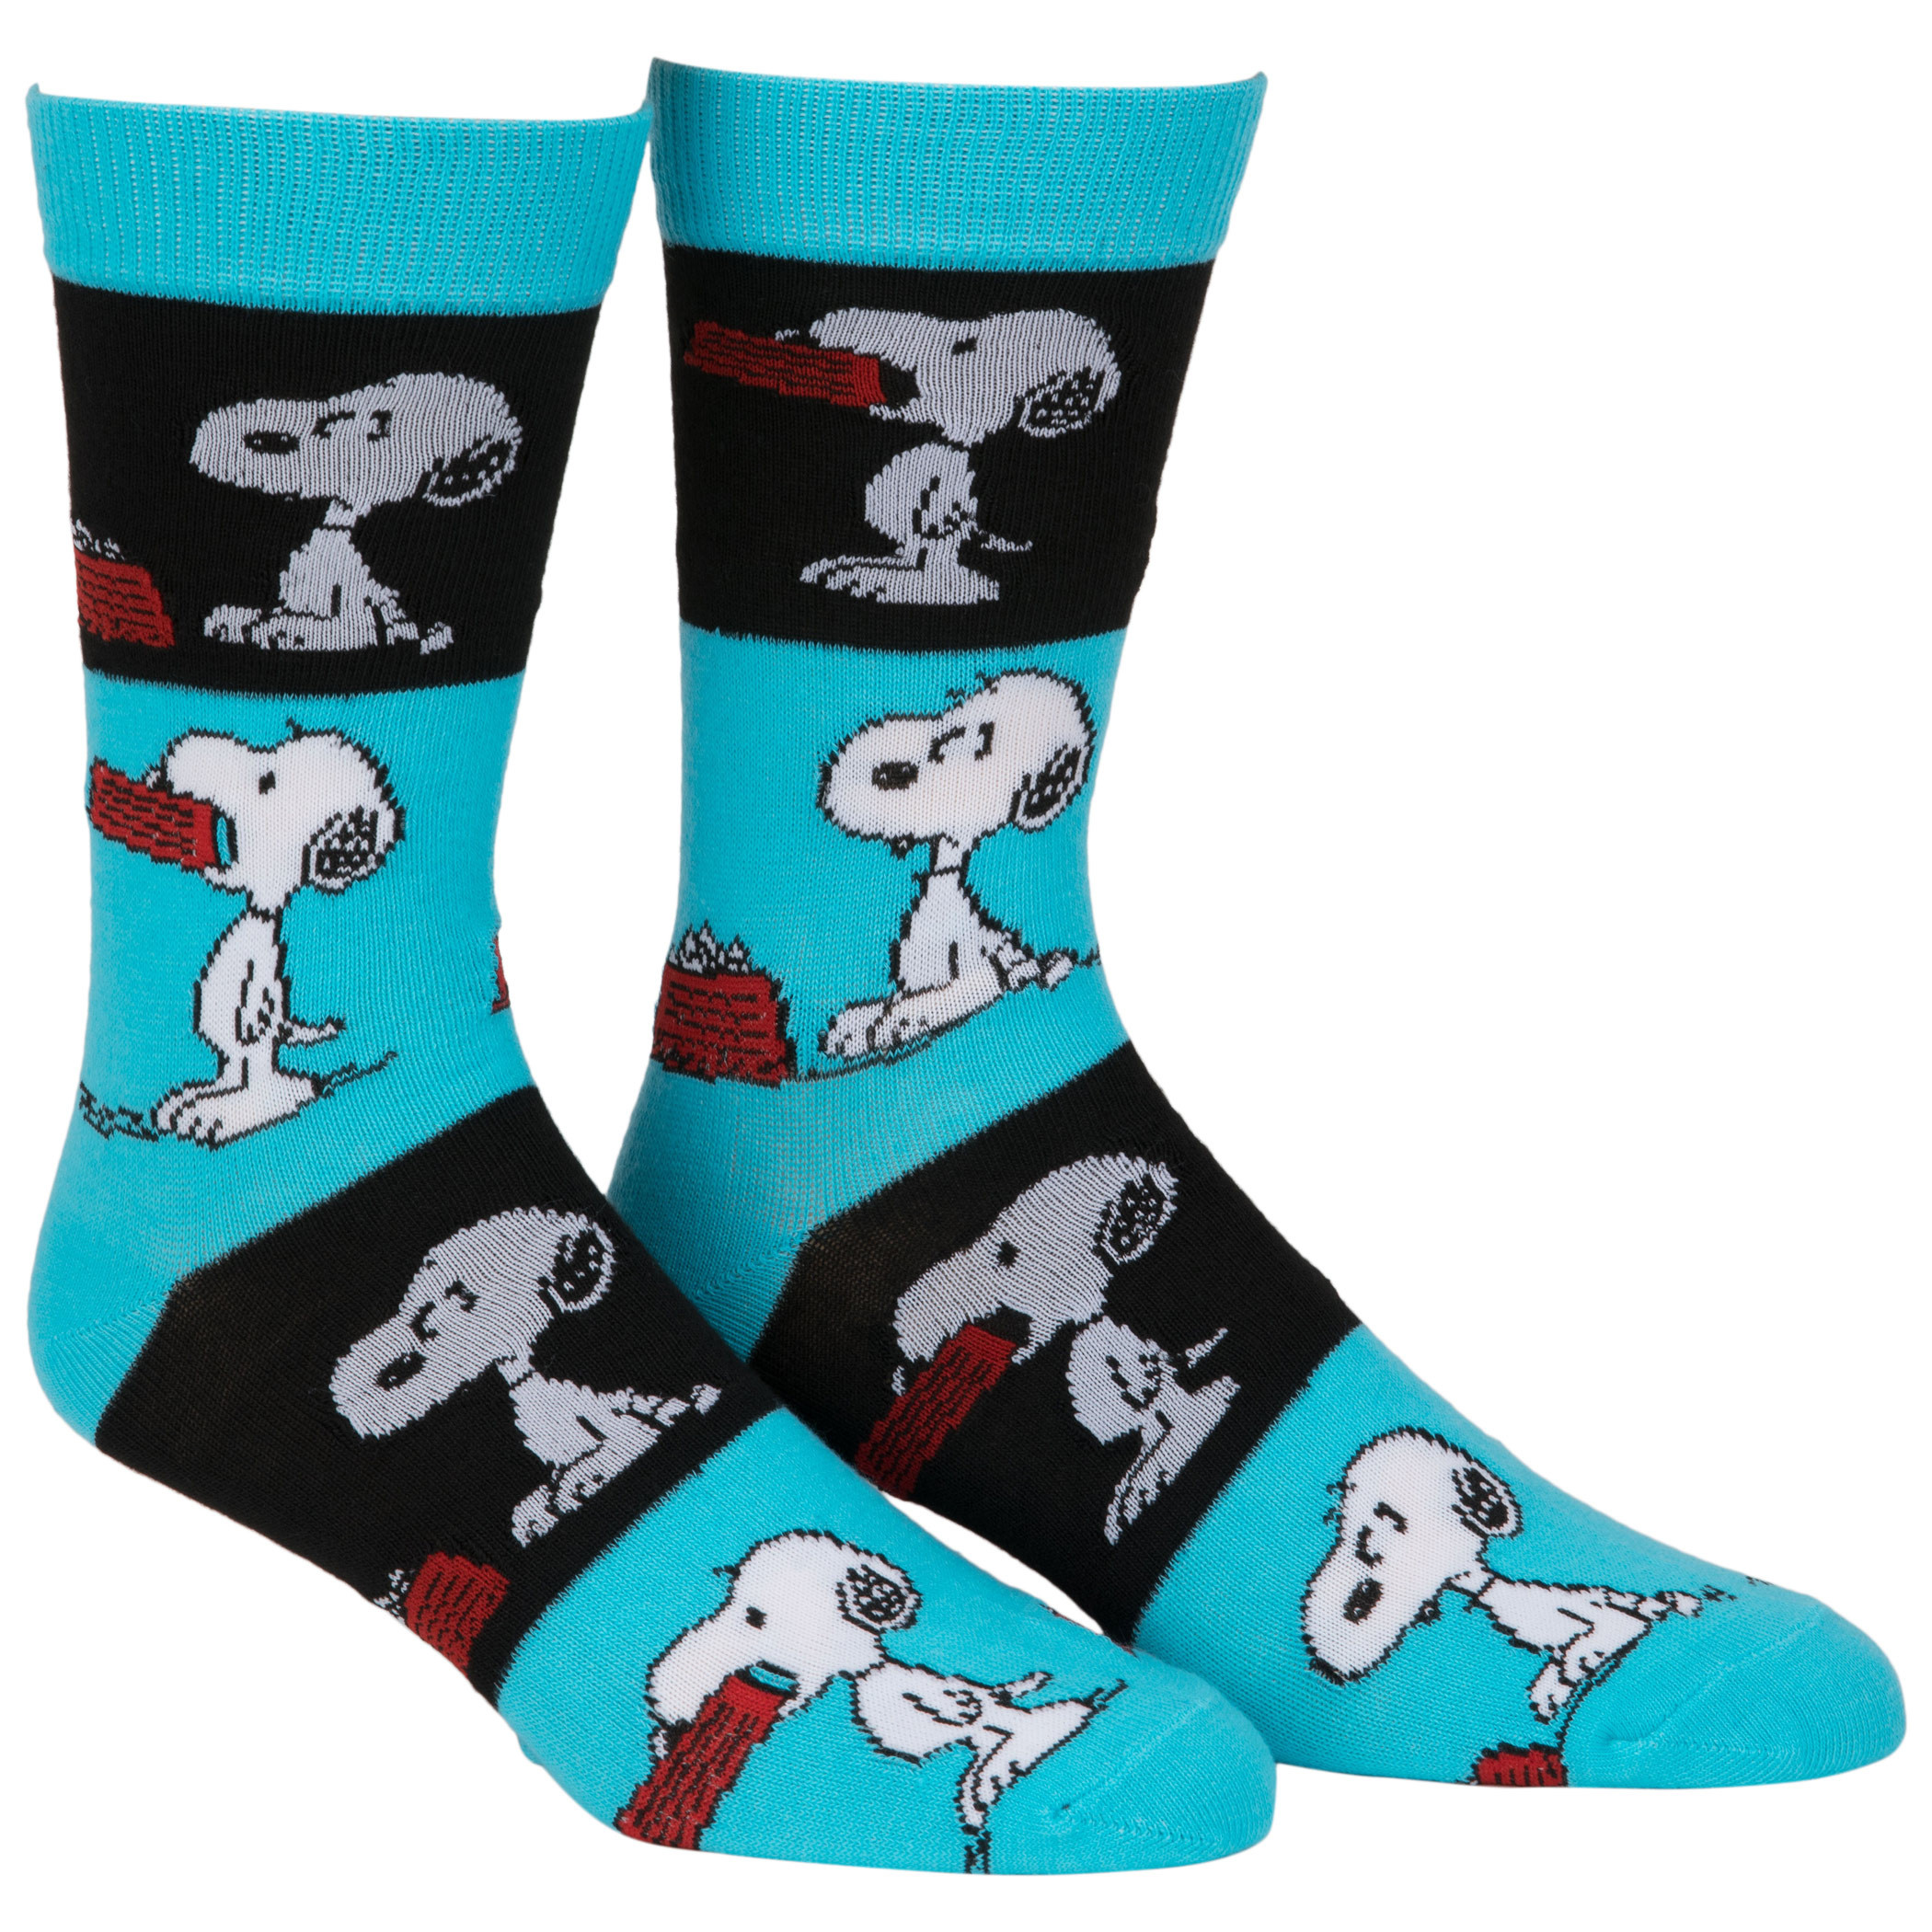 Peanuts Snoopy and Woodstock Friends 6-Pack Crew Socks